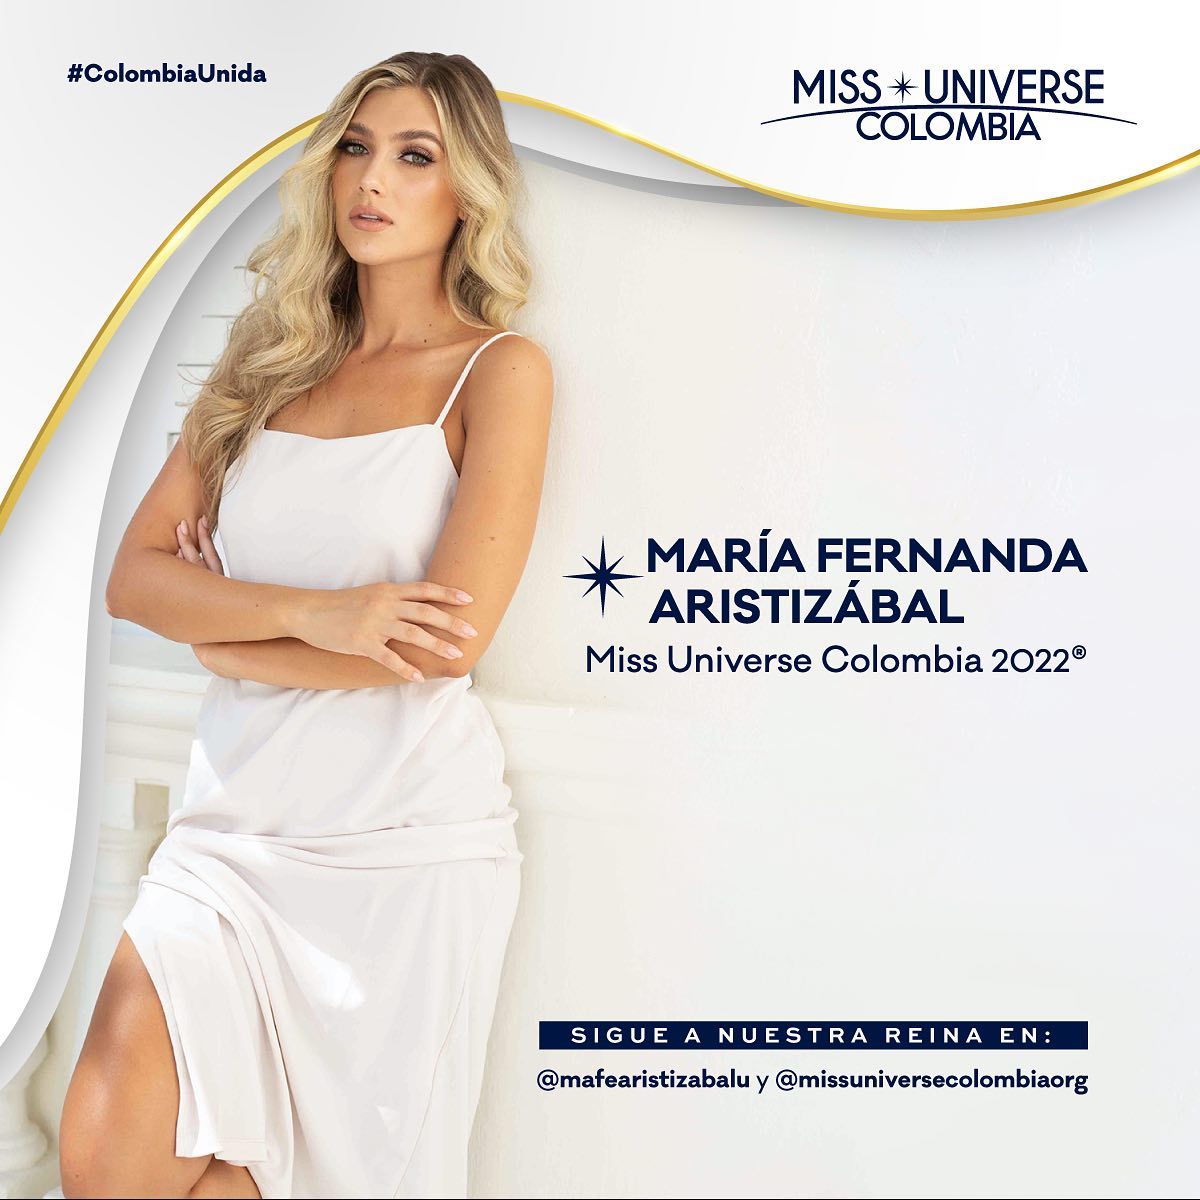 maria fernanda aristizabal, miss universe colombia 2022. 27604015